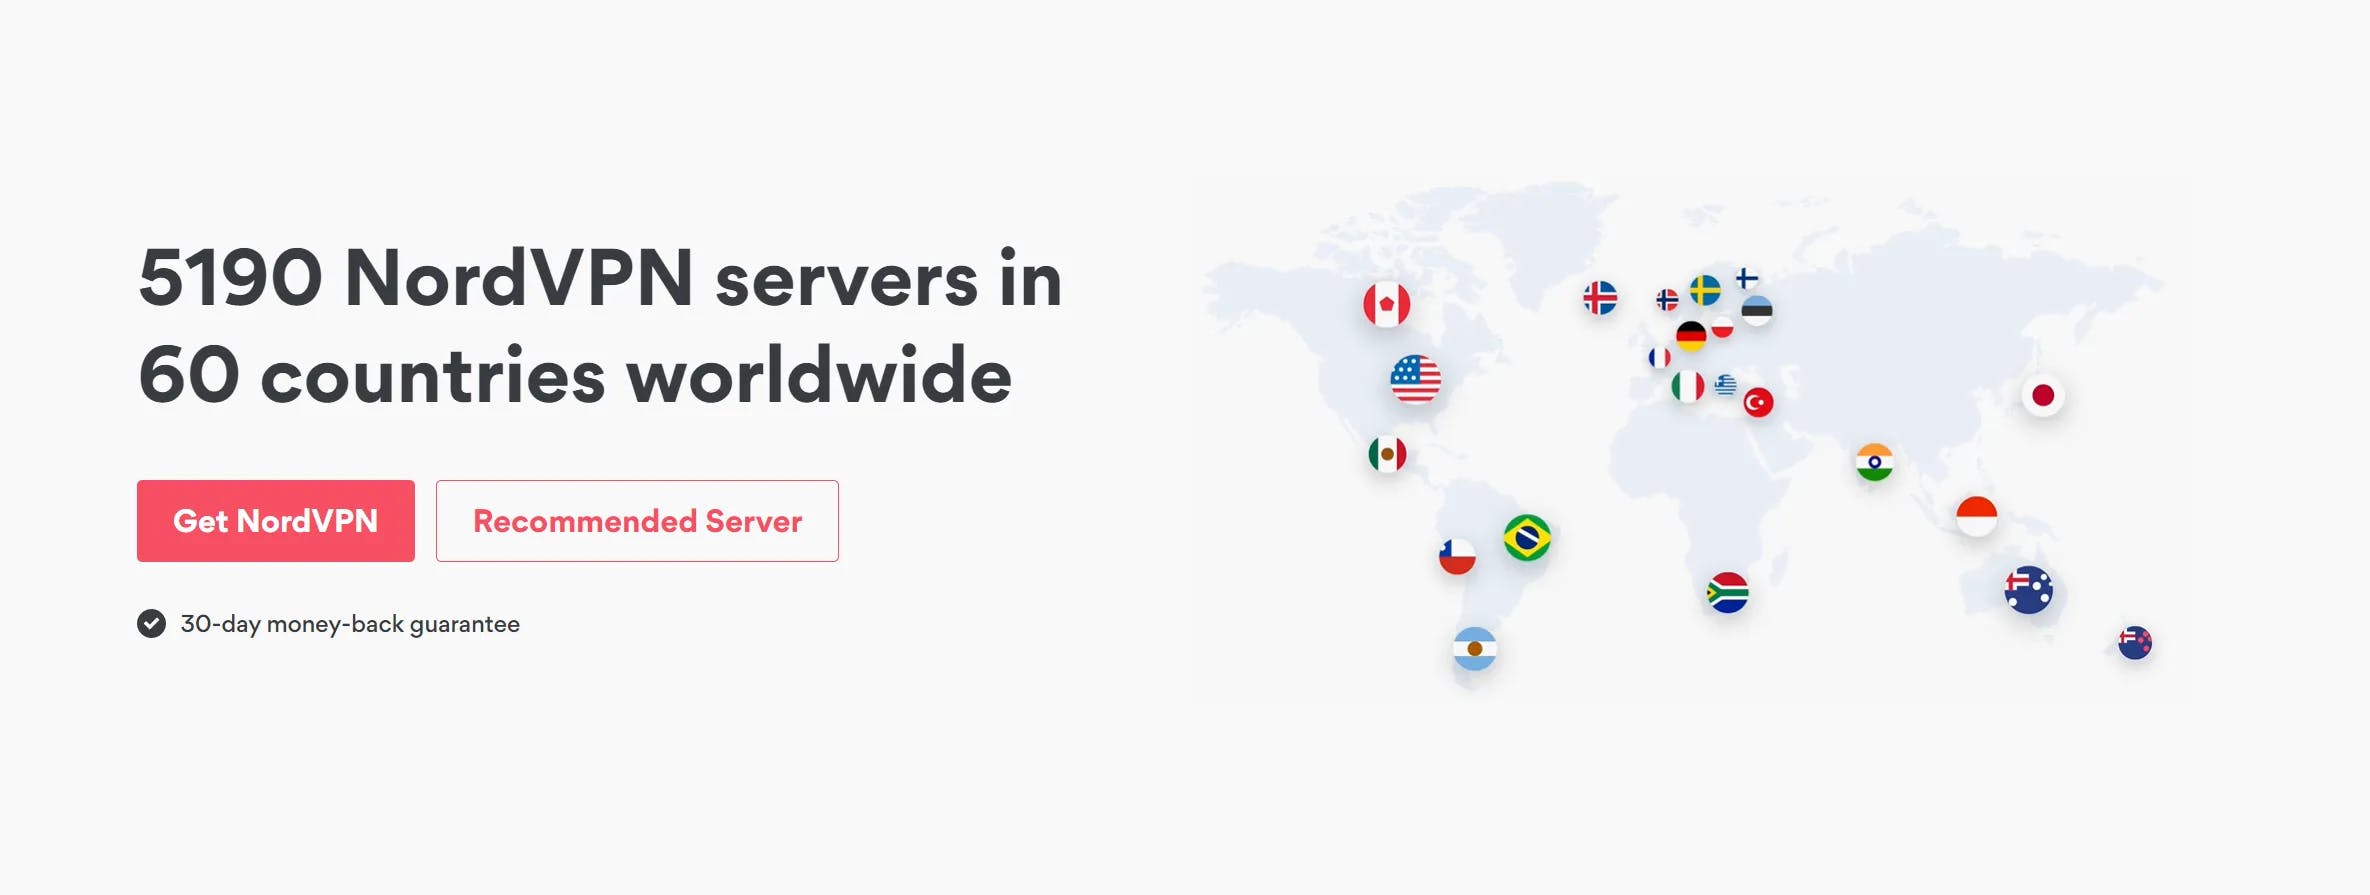 NordVPN server locations